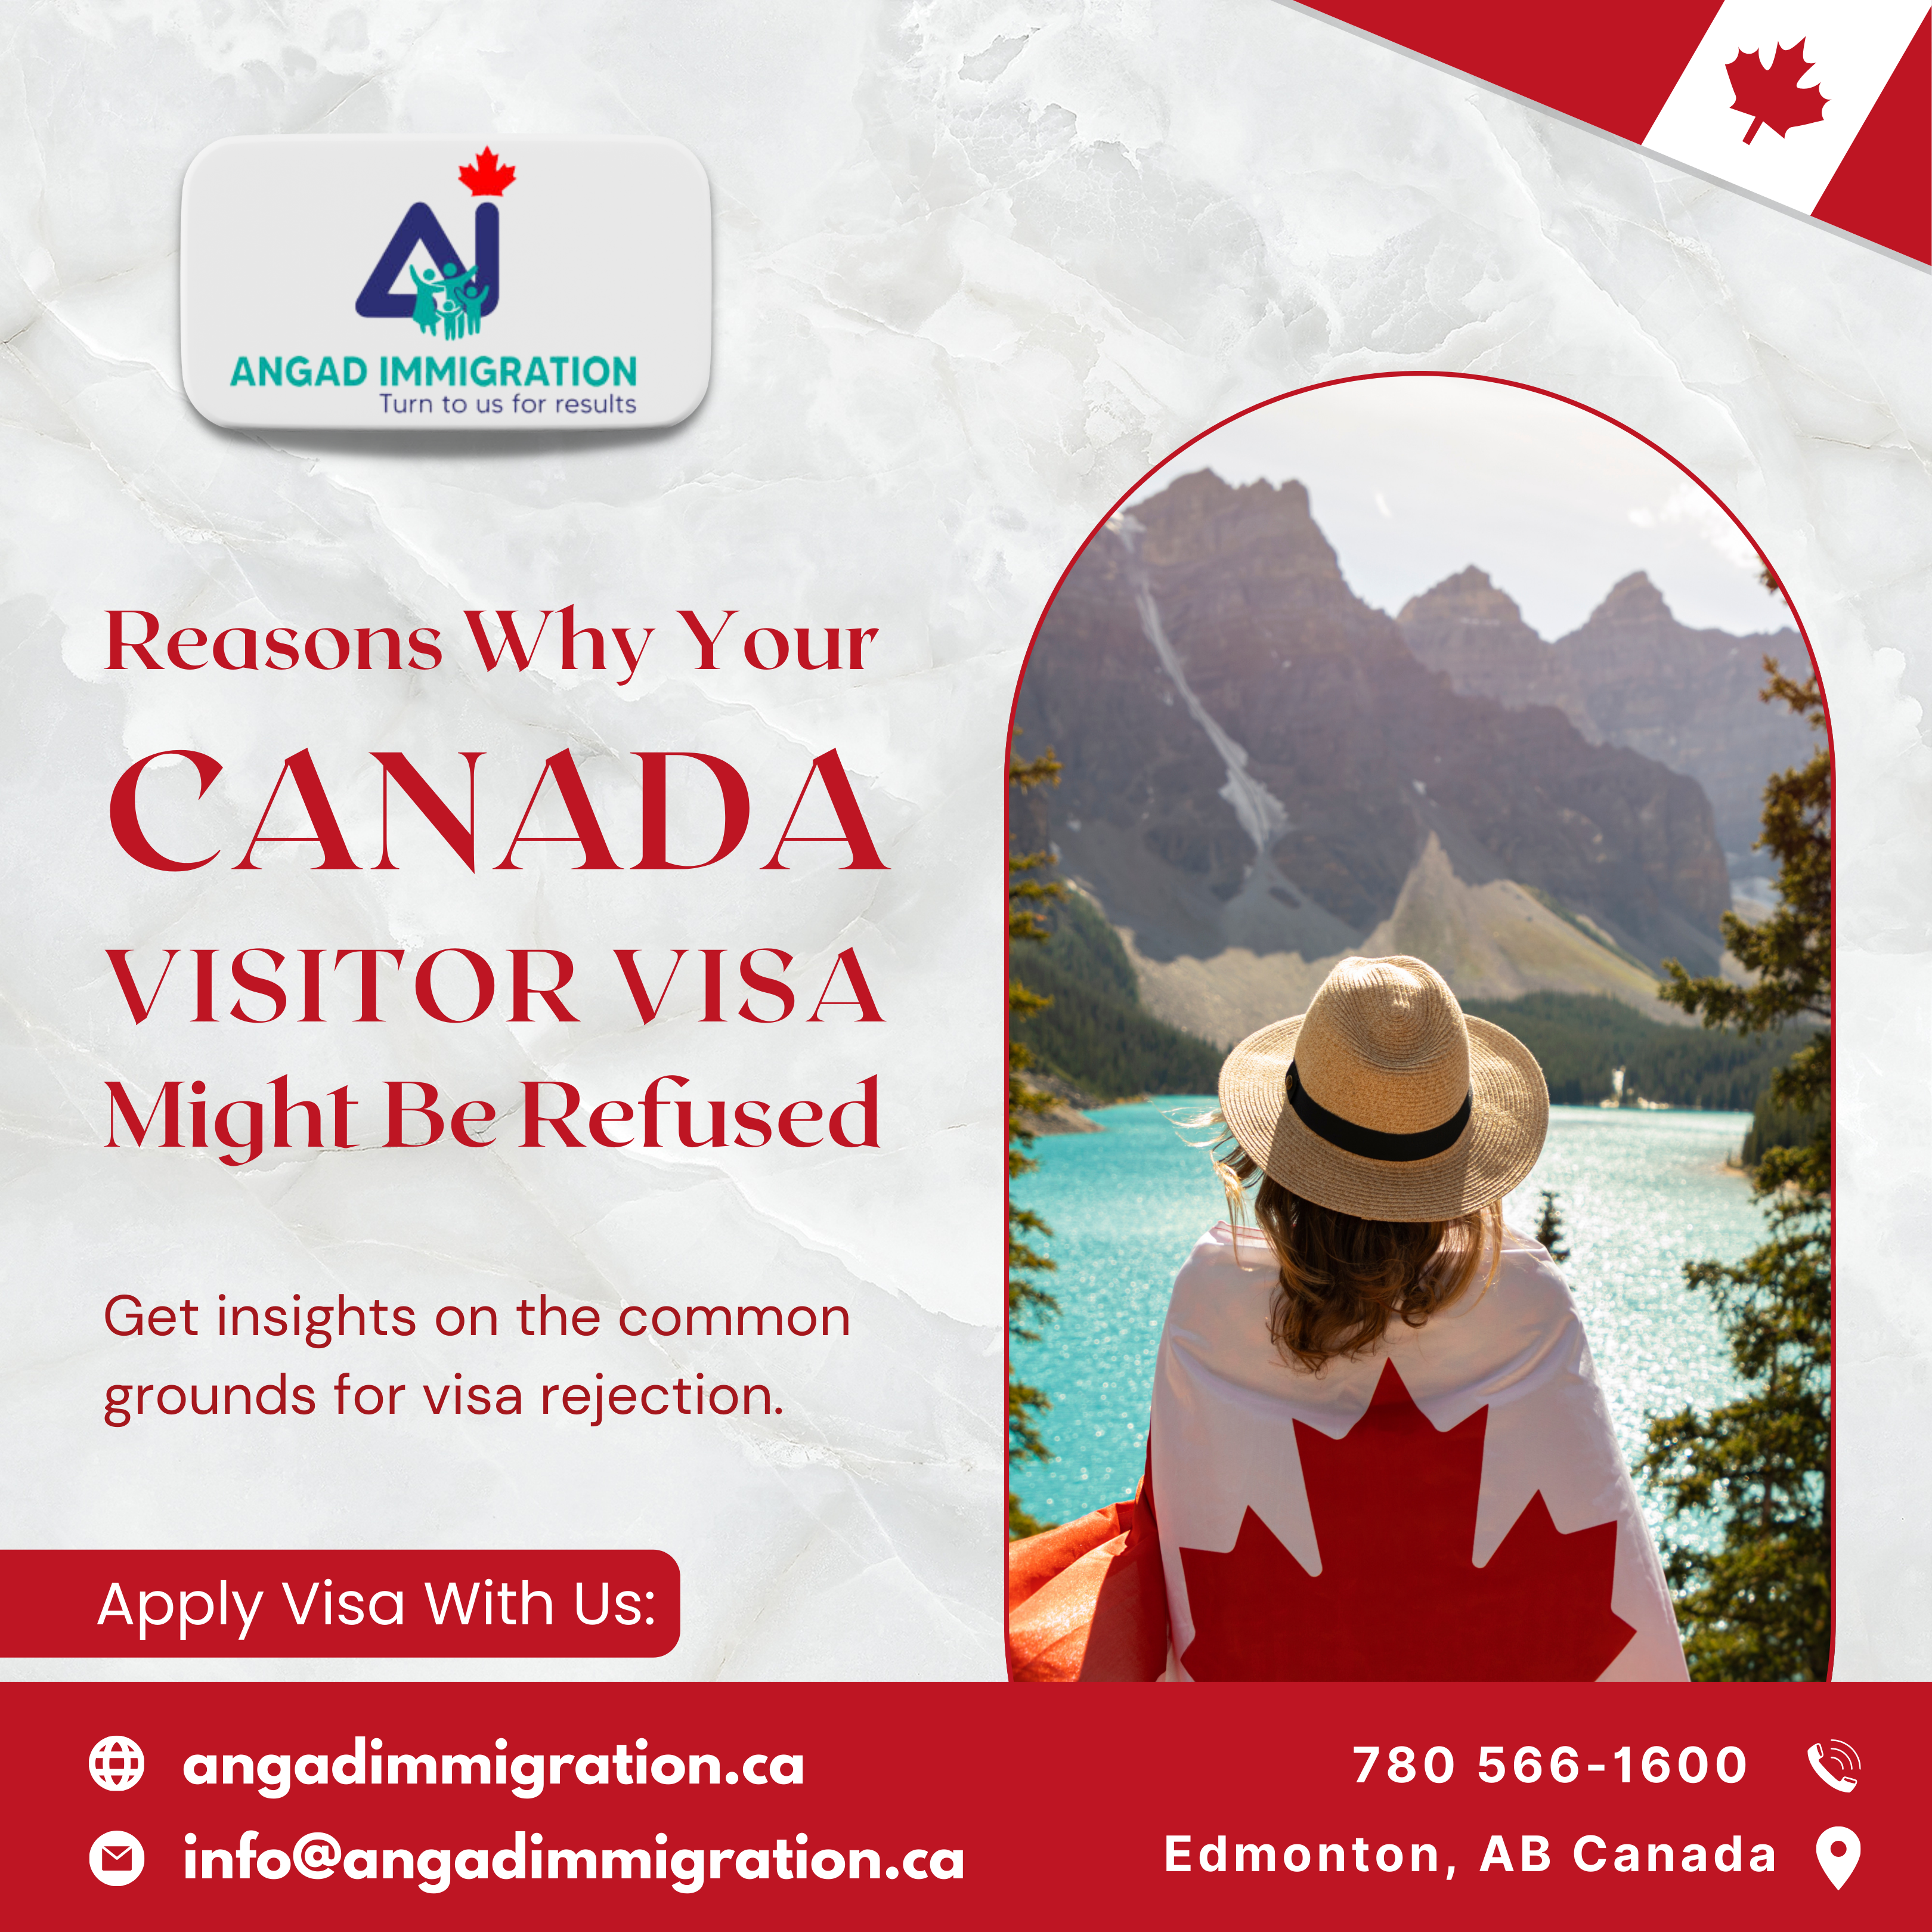 Canada Visitor Visa Refusal Reasons